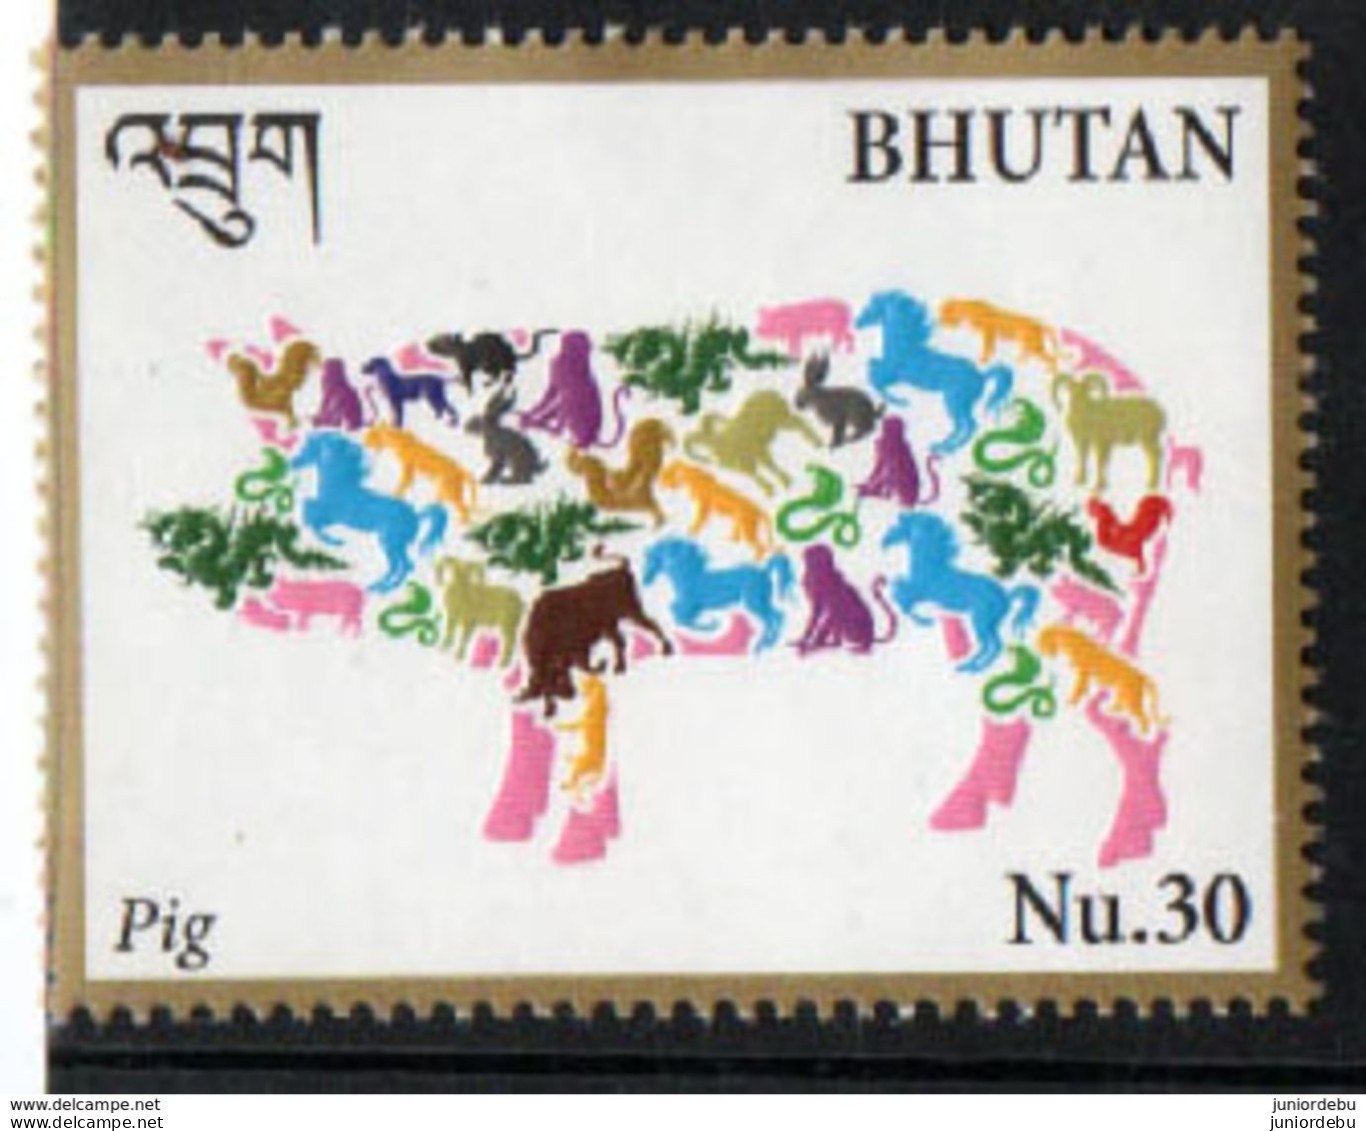 Bhutan  - 2017  - Fire Female Bird Year - Pig -  MNH. ( OL 23/02/2020 ) - Bhutan